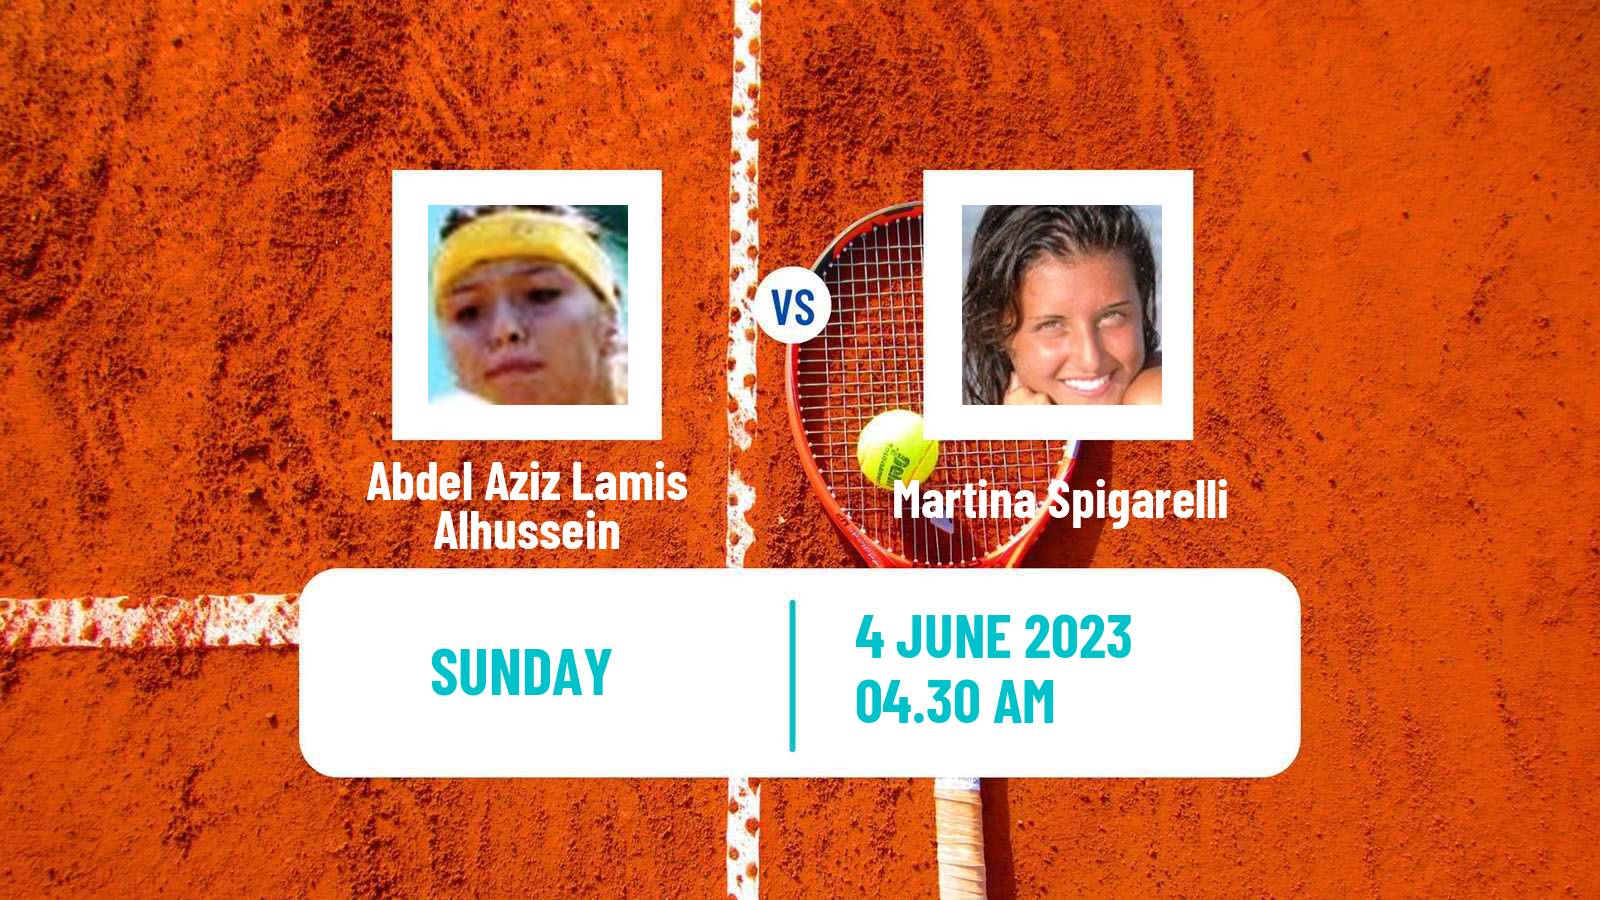 Tennis ITF W15 Monastir 17 Women Abdel Aziz Lamis Alhussein - Martina Spigarelli